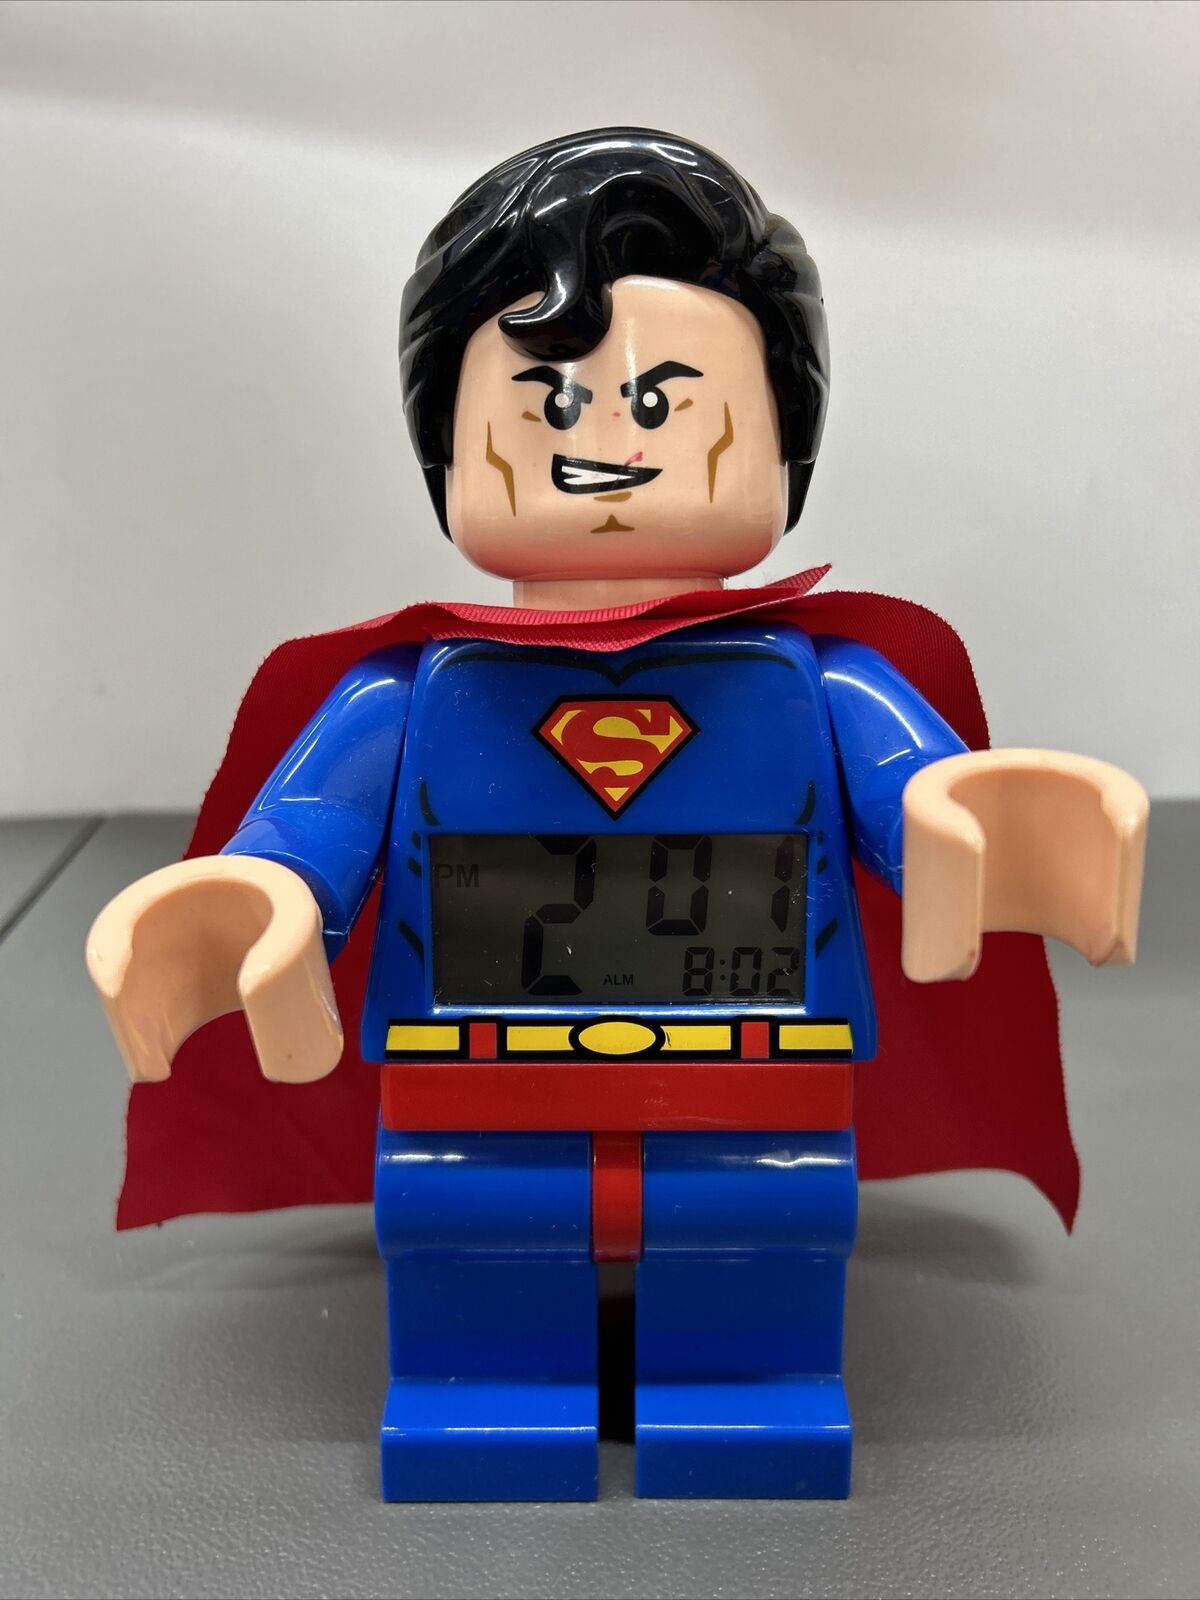 2013 Lego Superman Digital Alarm Clock DC Comics Super Heroes Tested Works 9”